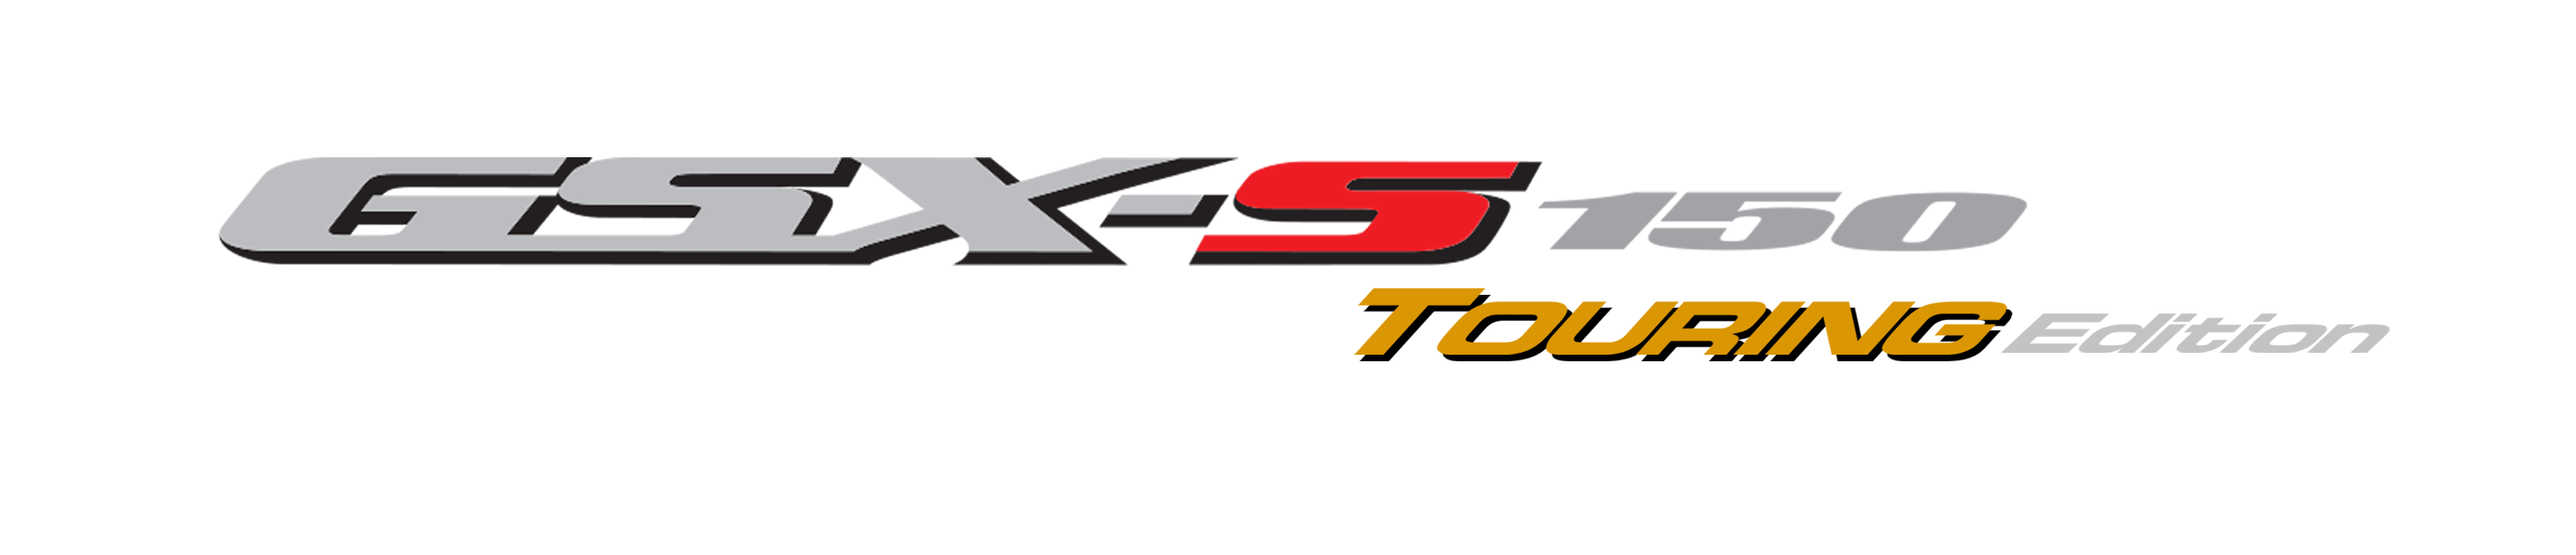 LOGO_GSX-S150_Touring Edition